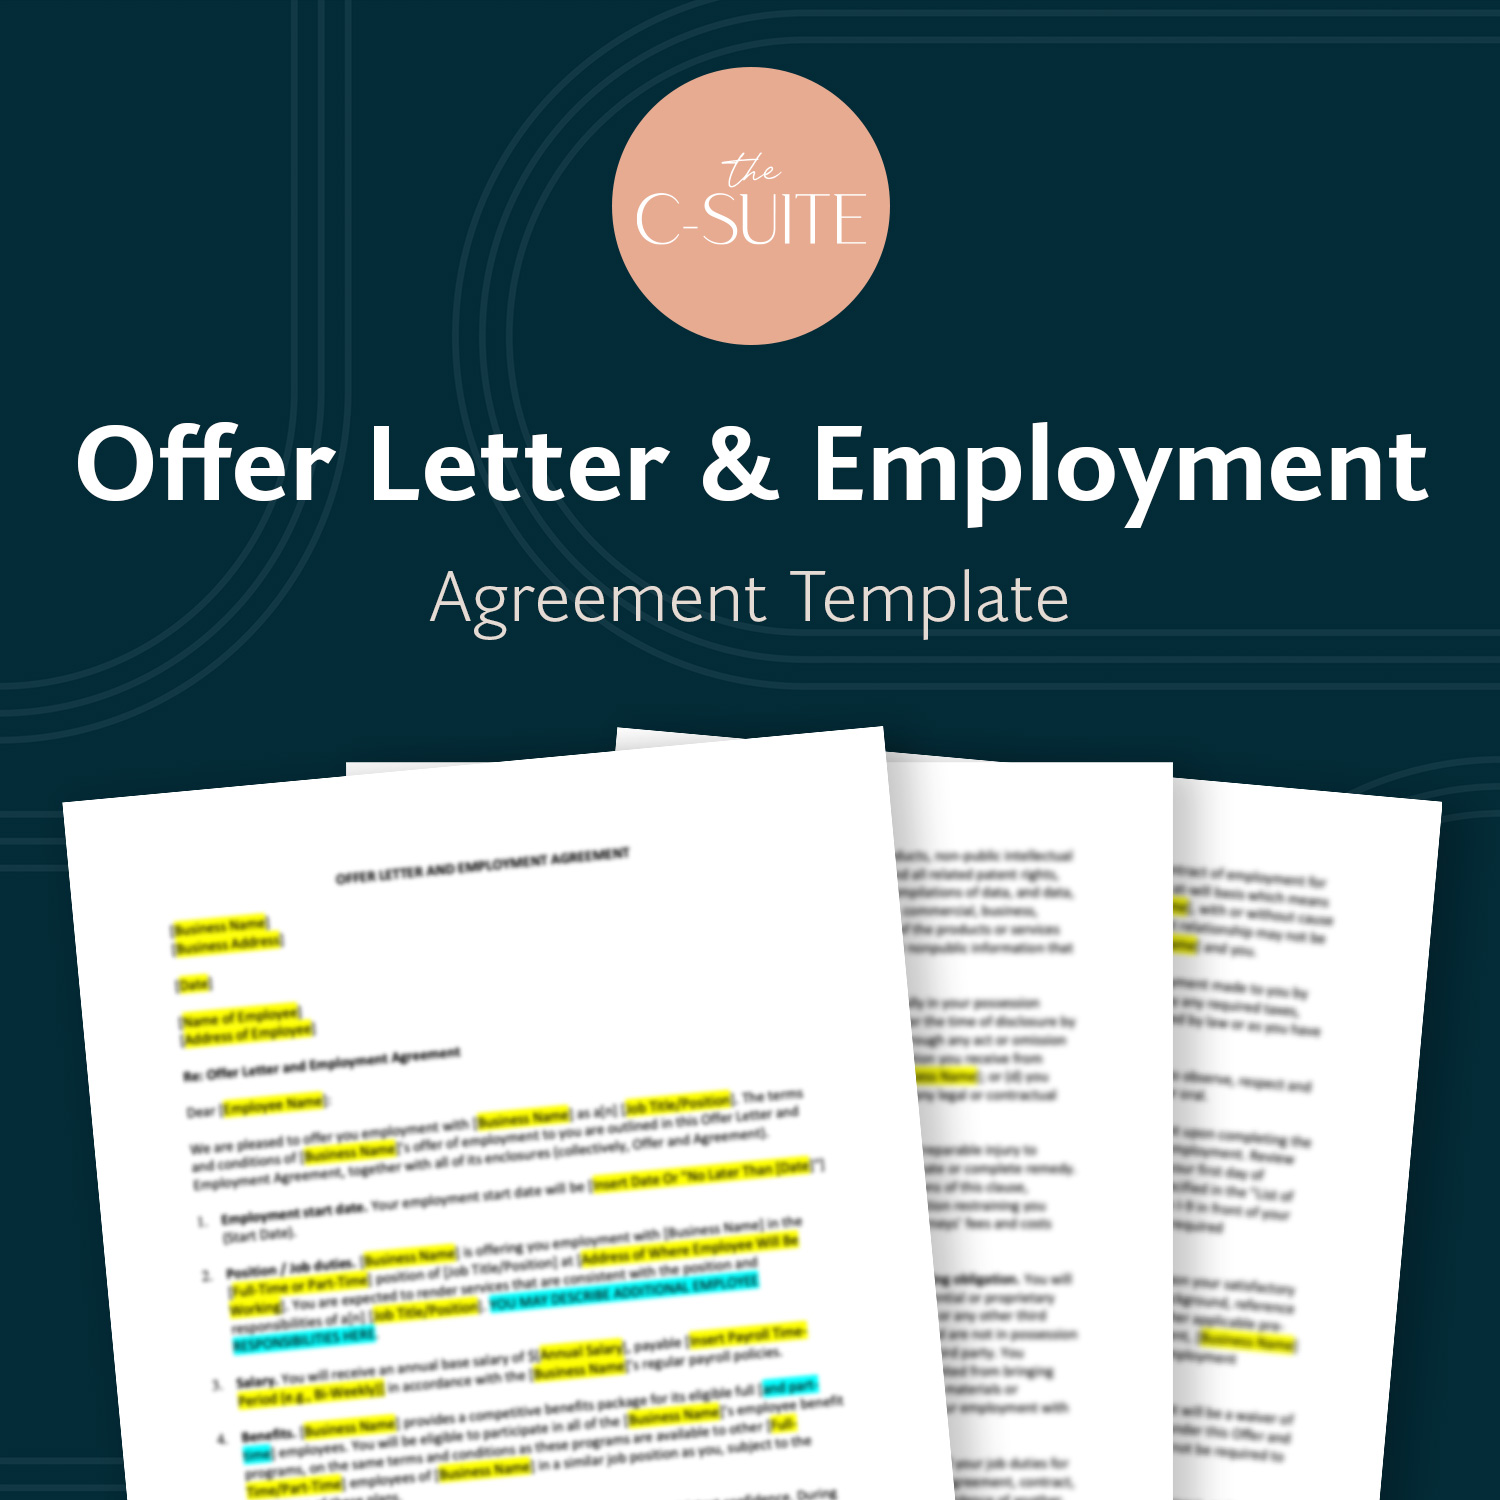 Offer Letter & Employment Agreement Template